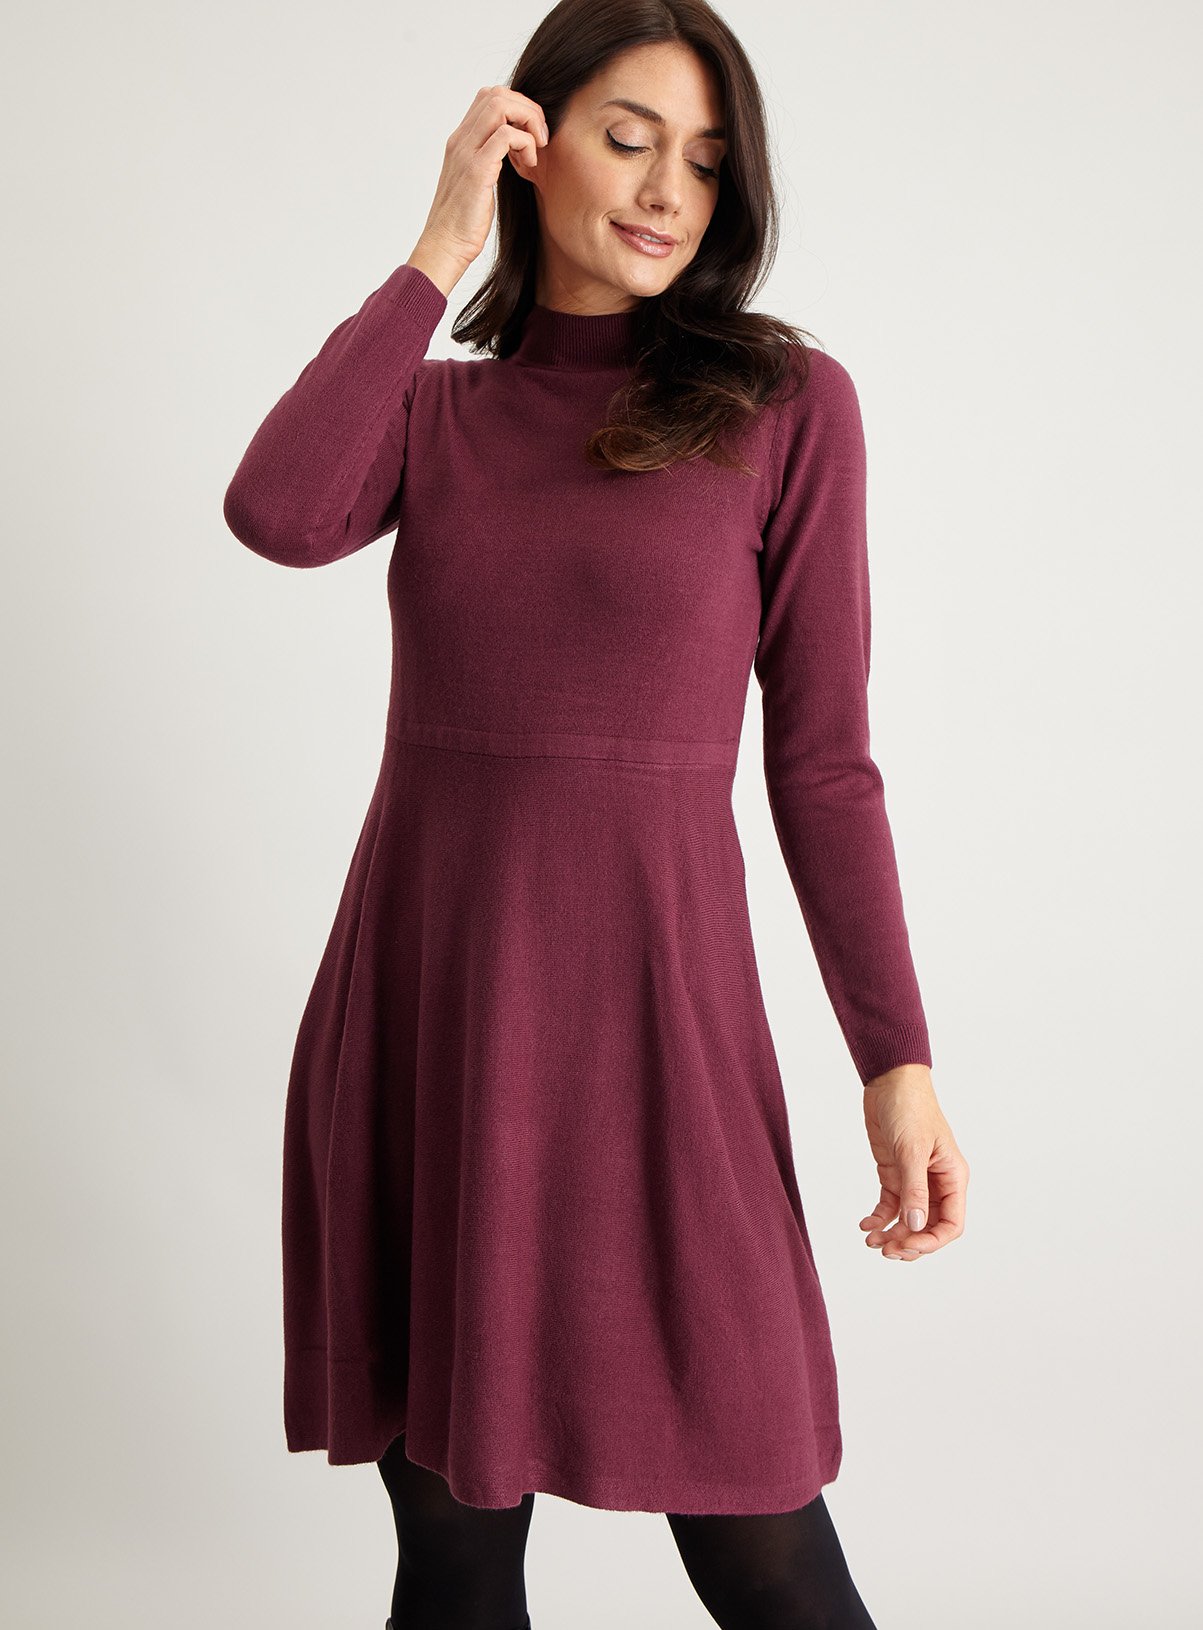 Aubergine Long Sleeve Soft Touch Jumper Dress Review